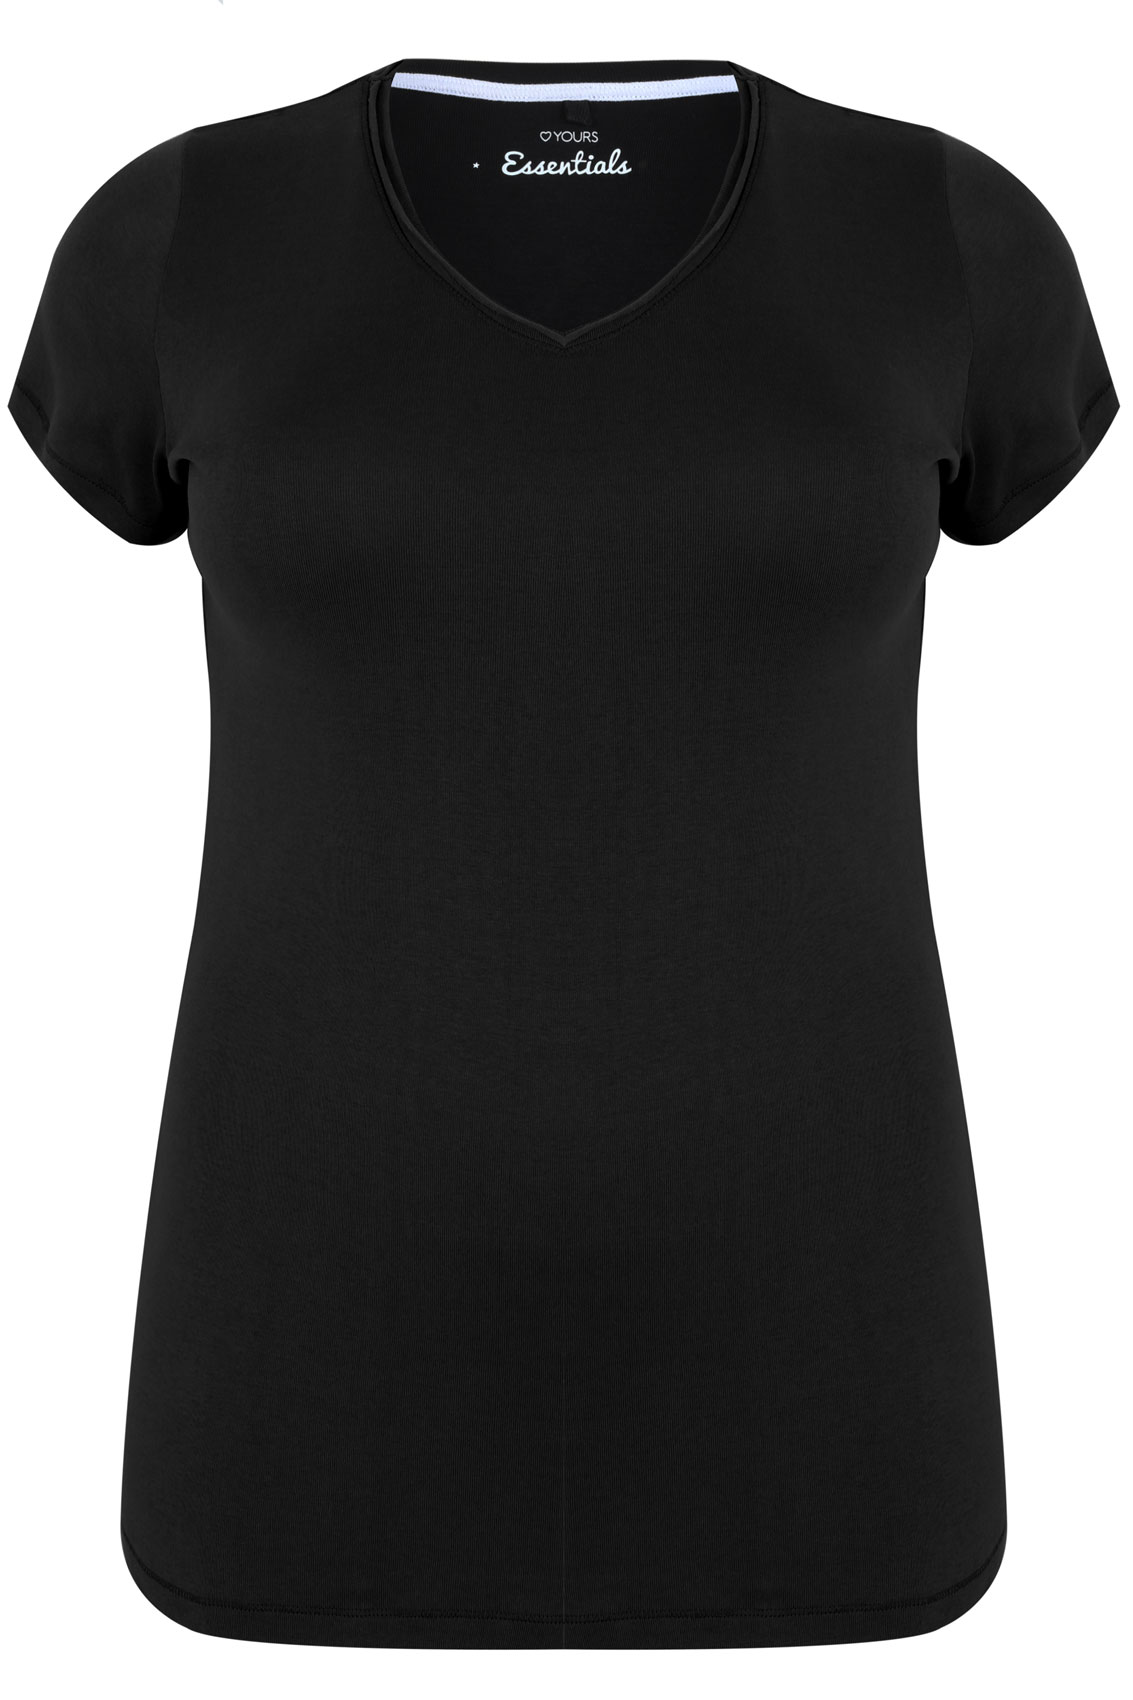 Black Short Sleeved VNeck Basic TShirt Plus Size 16 to 36